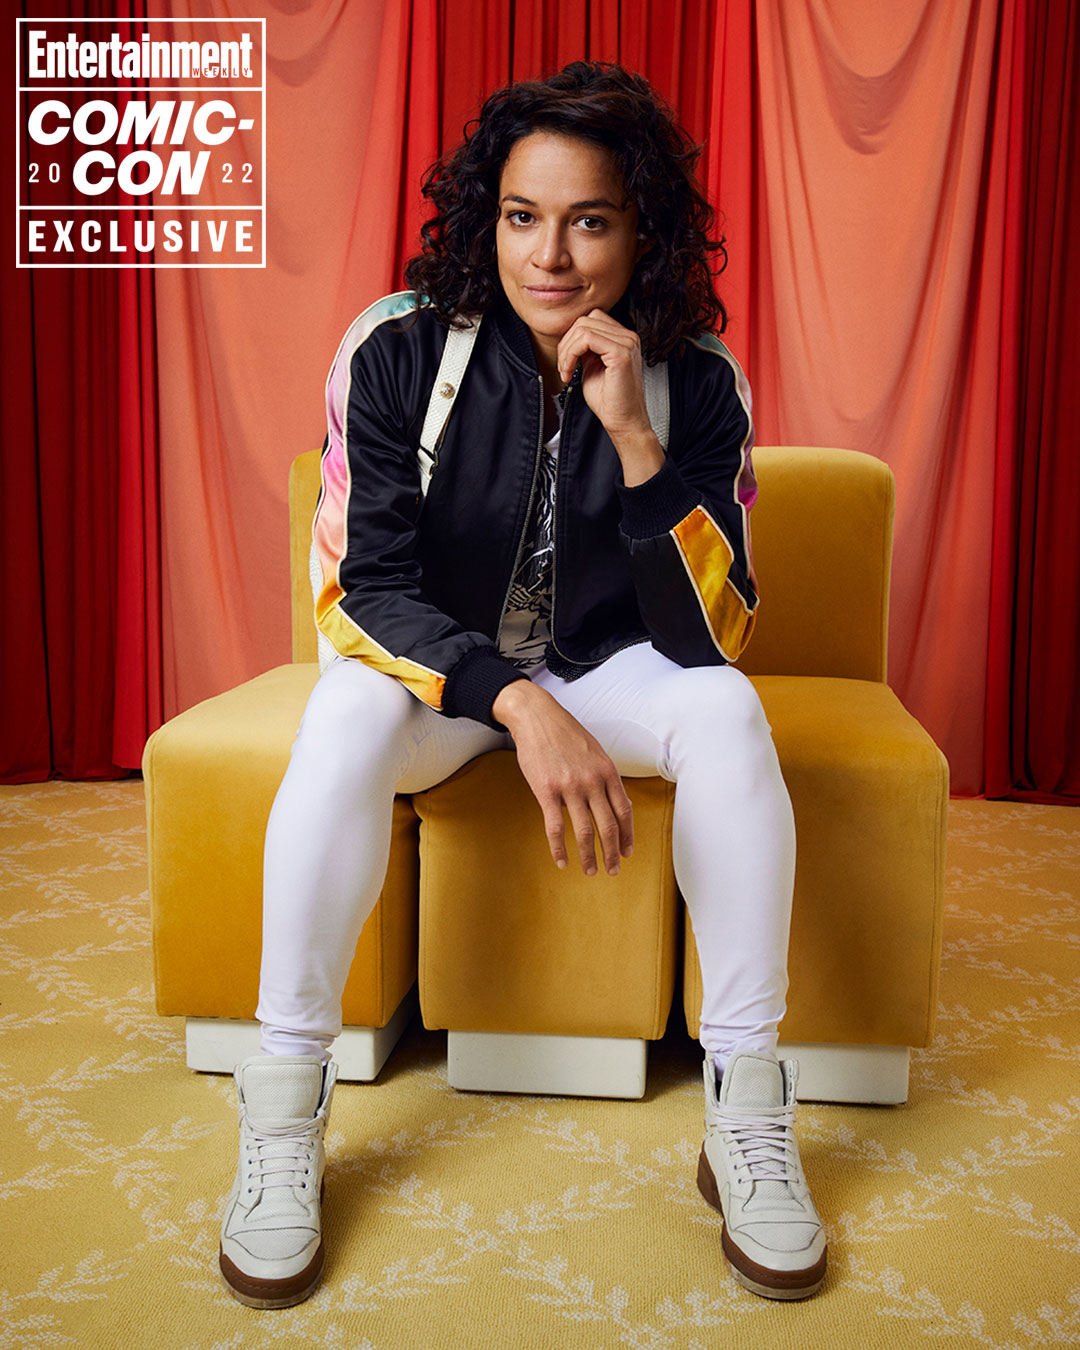 Michelle Rodriguez - Comic-Con Portrait by Entertainment Weekly - 2022